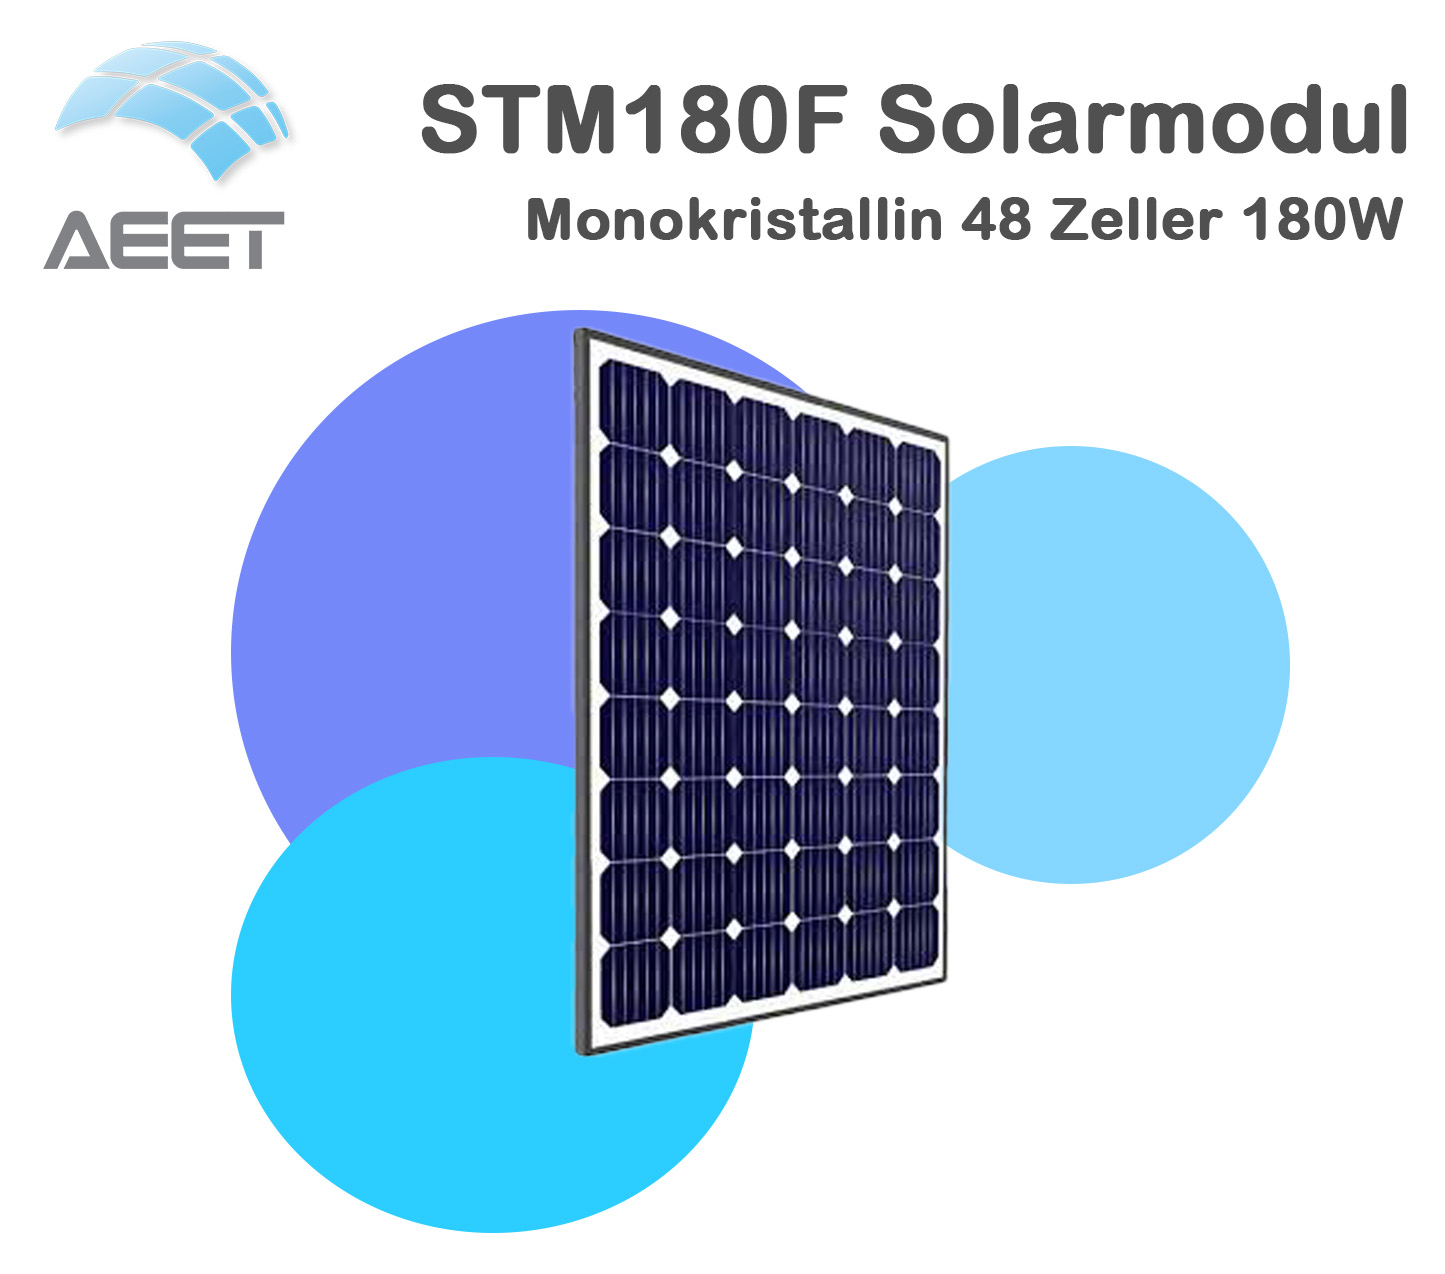 Solarmodule 1324x992x40mm 48 Zeller Mono ReFit